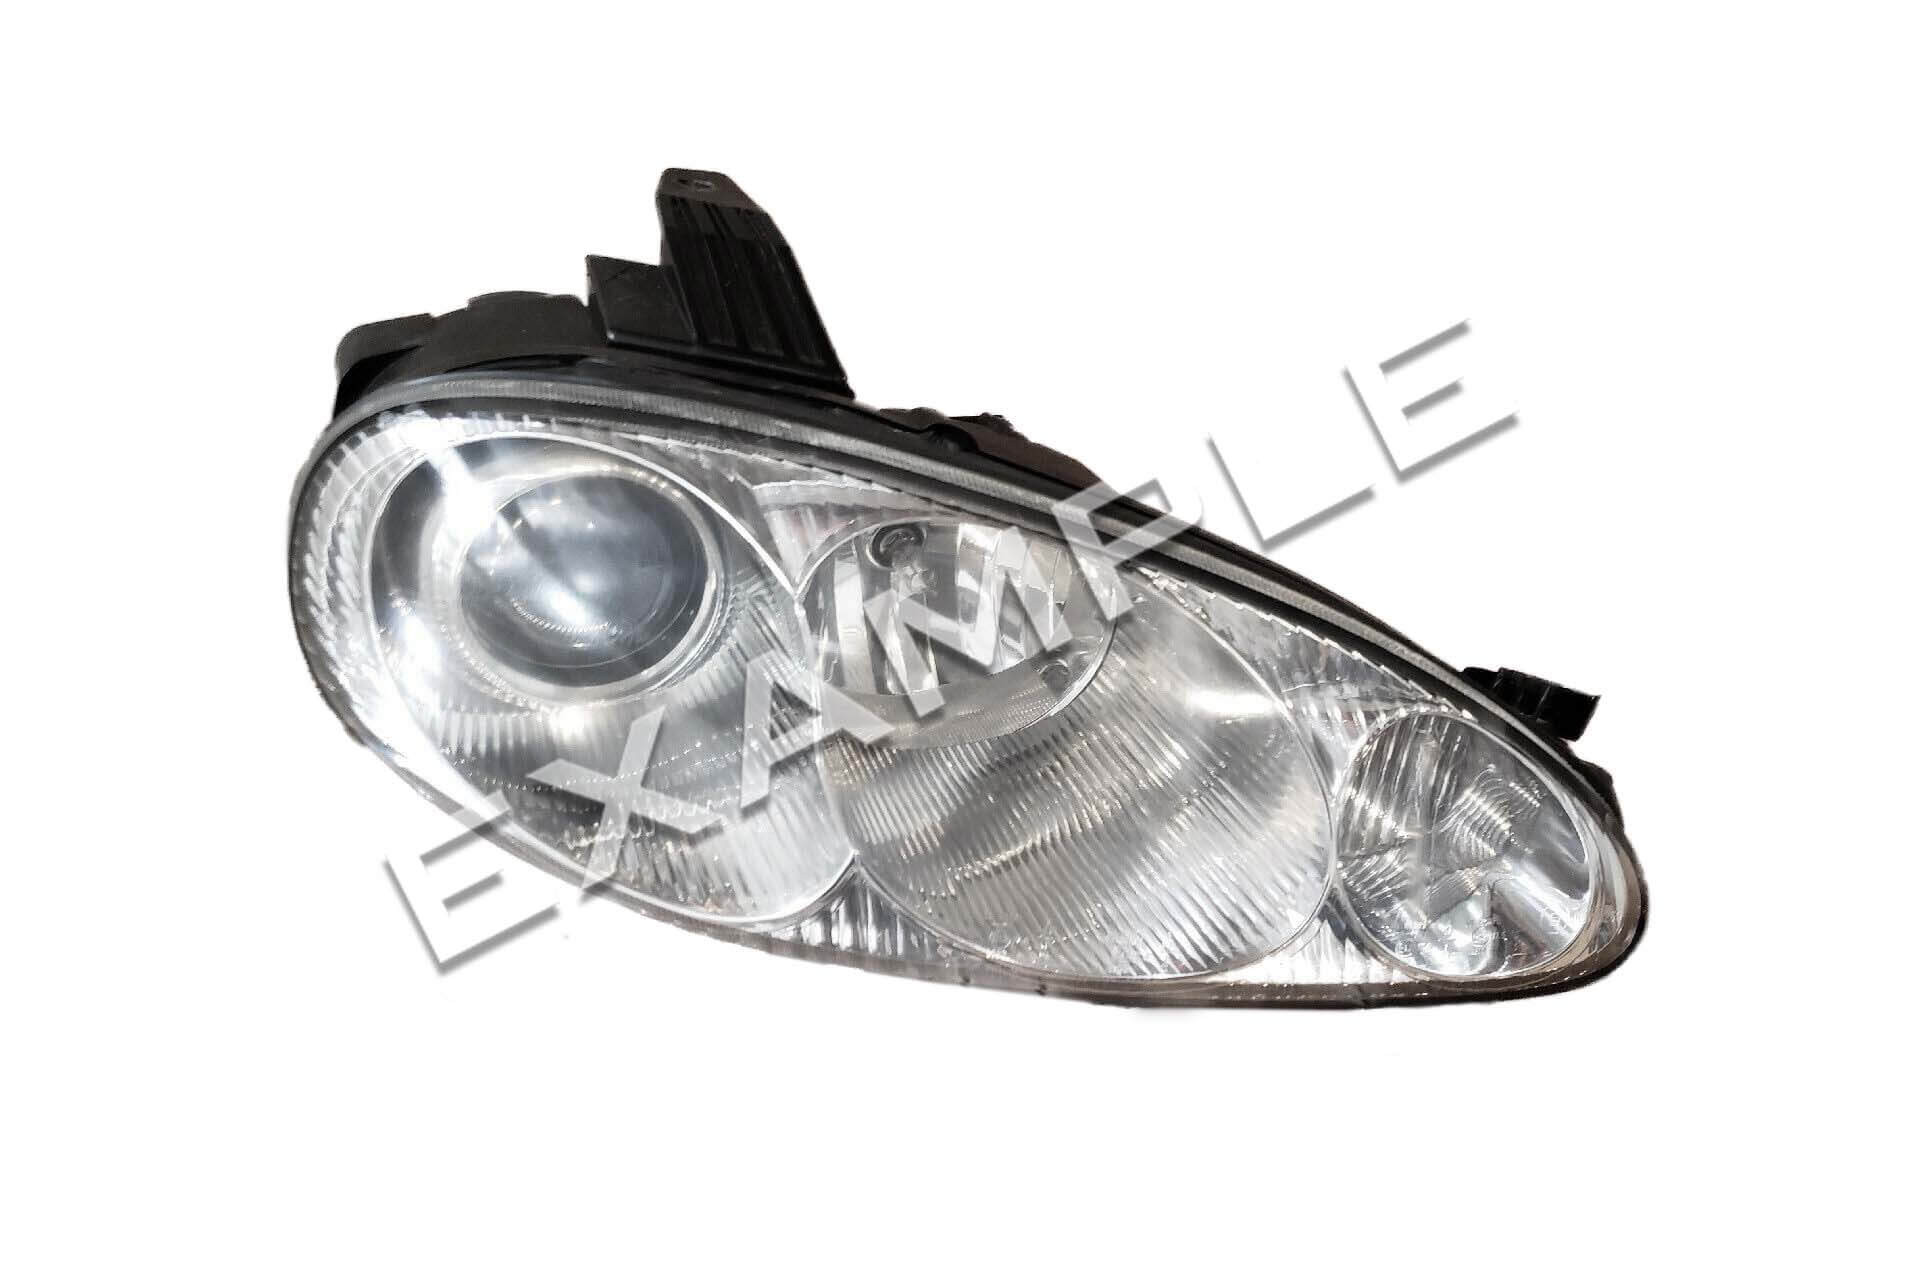 Mazda MX-5 Miata NB2 FL 01-05 Bi-xenon light upgrade retrofit kit for H7 halogen projector headlights